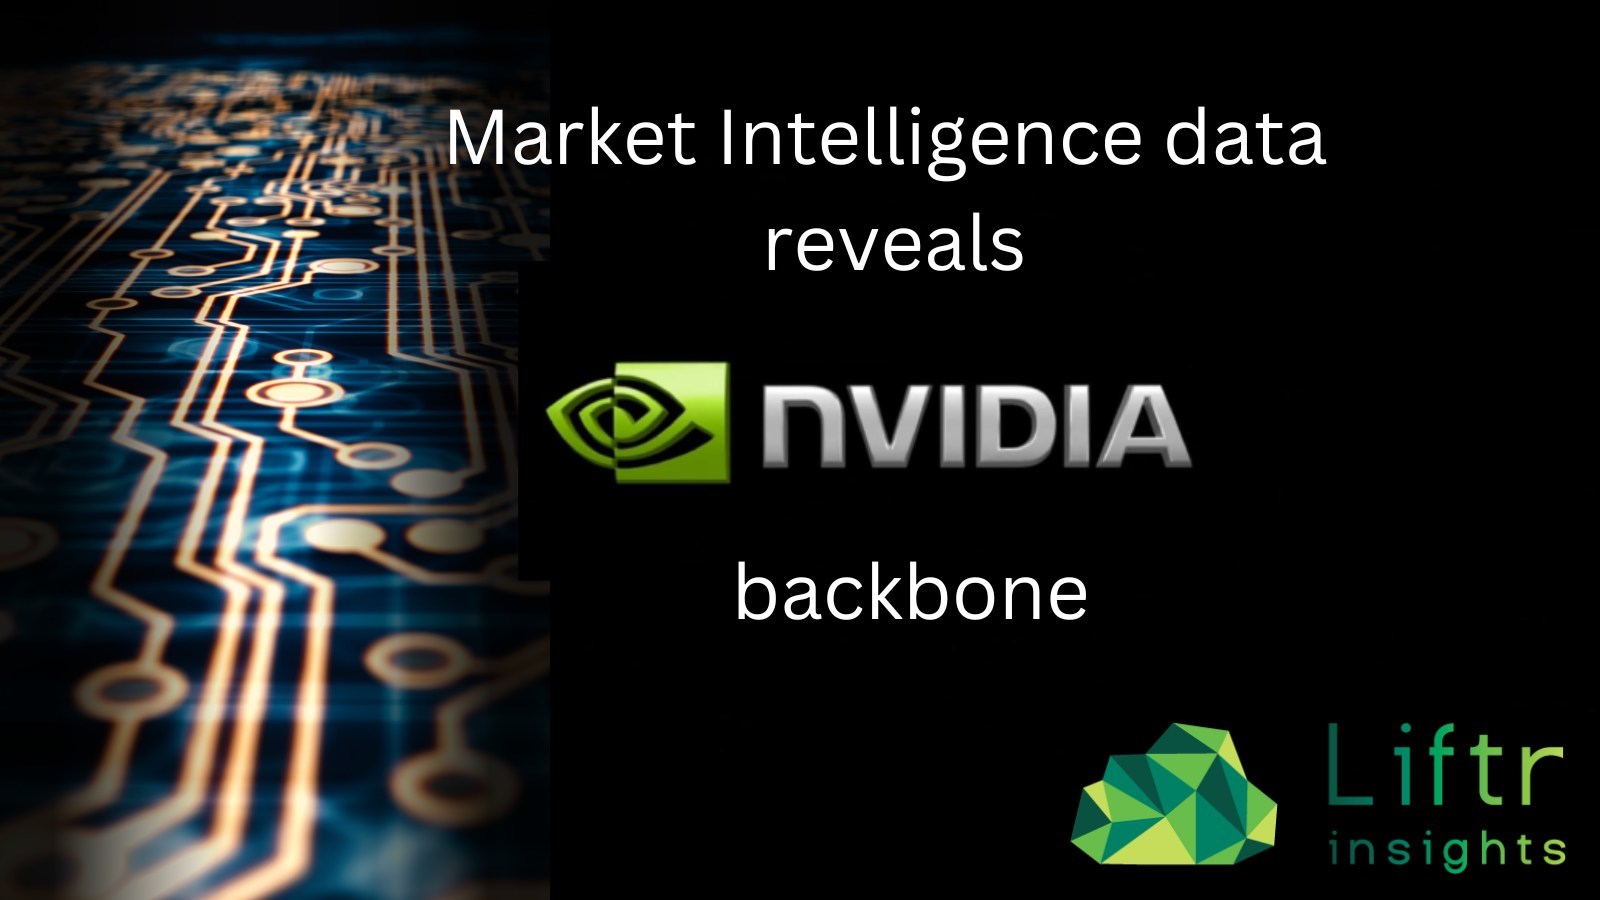 NVIDIA's backbone revealed by data signals